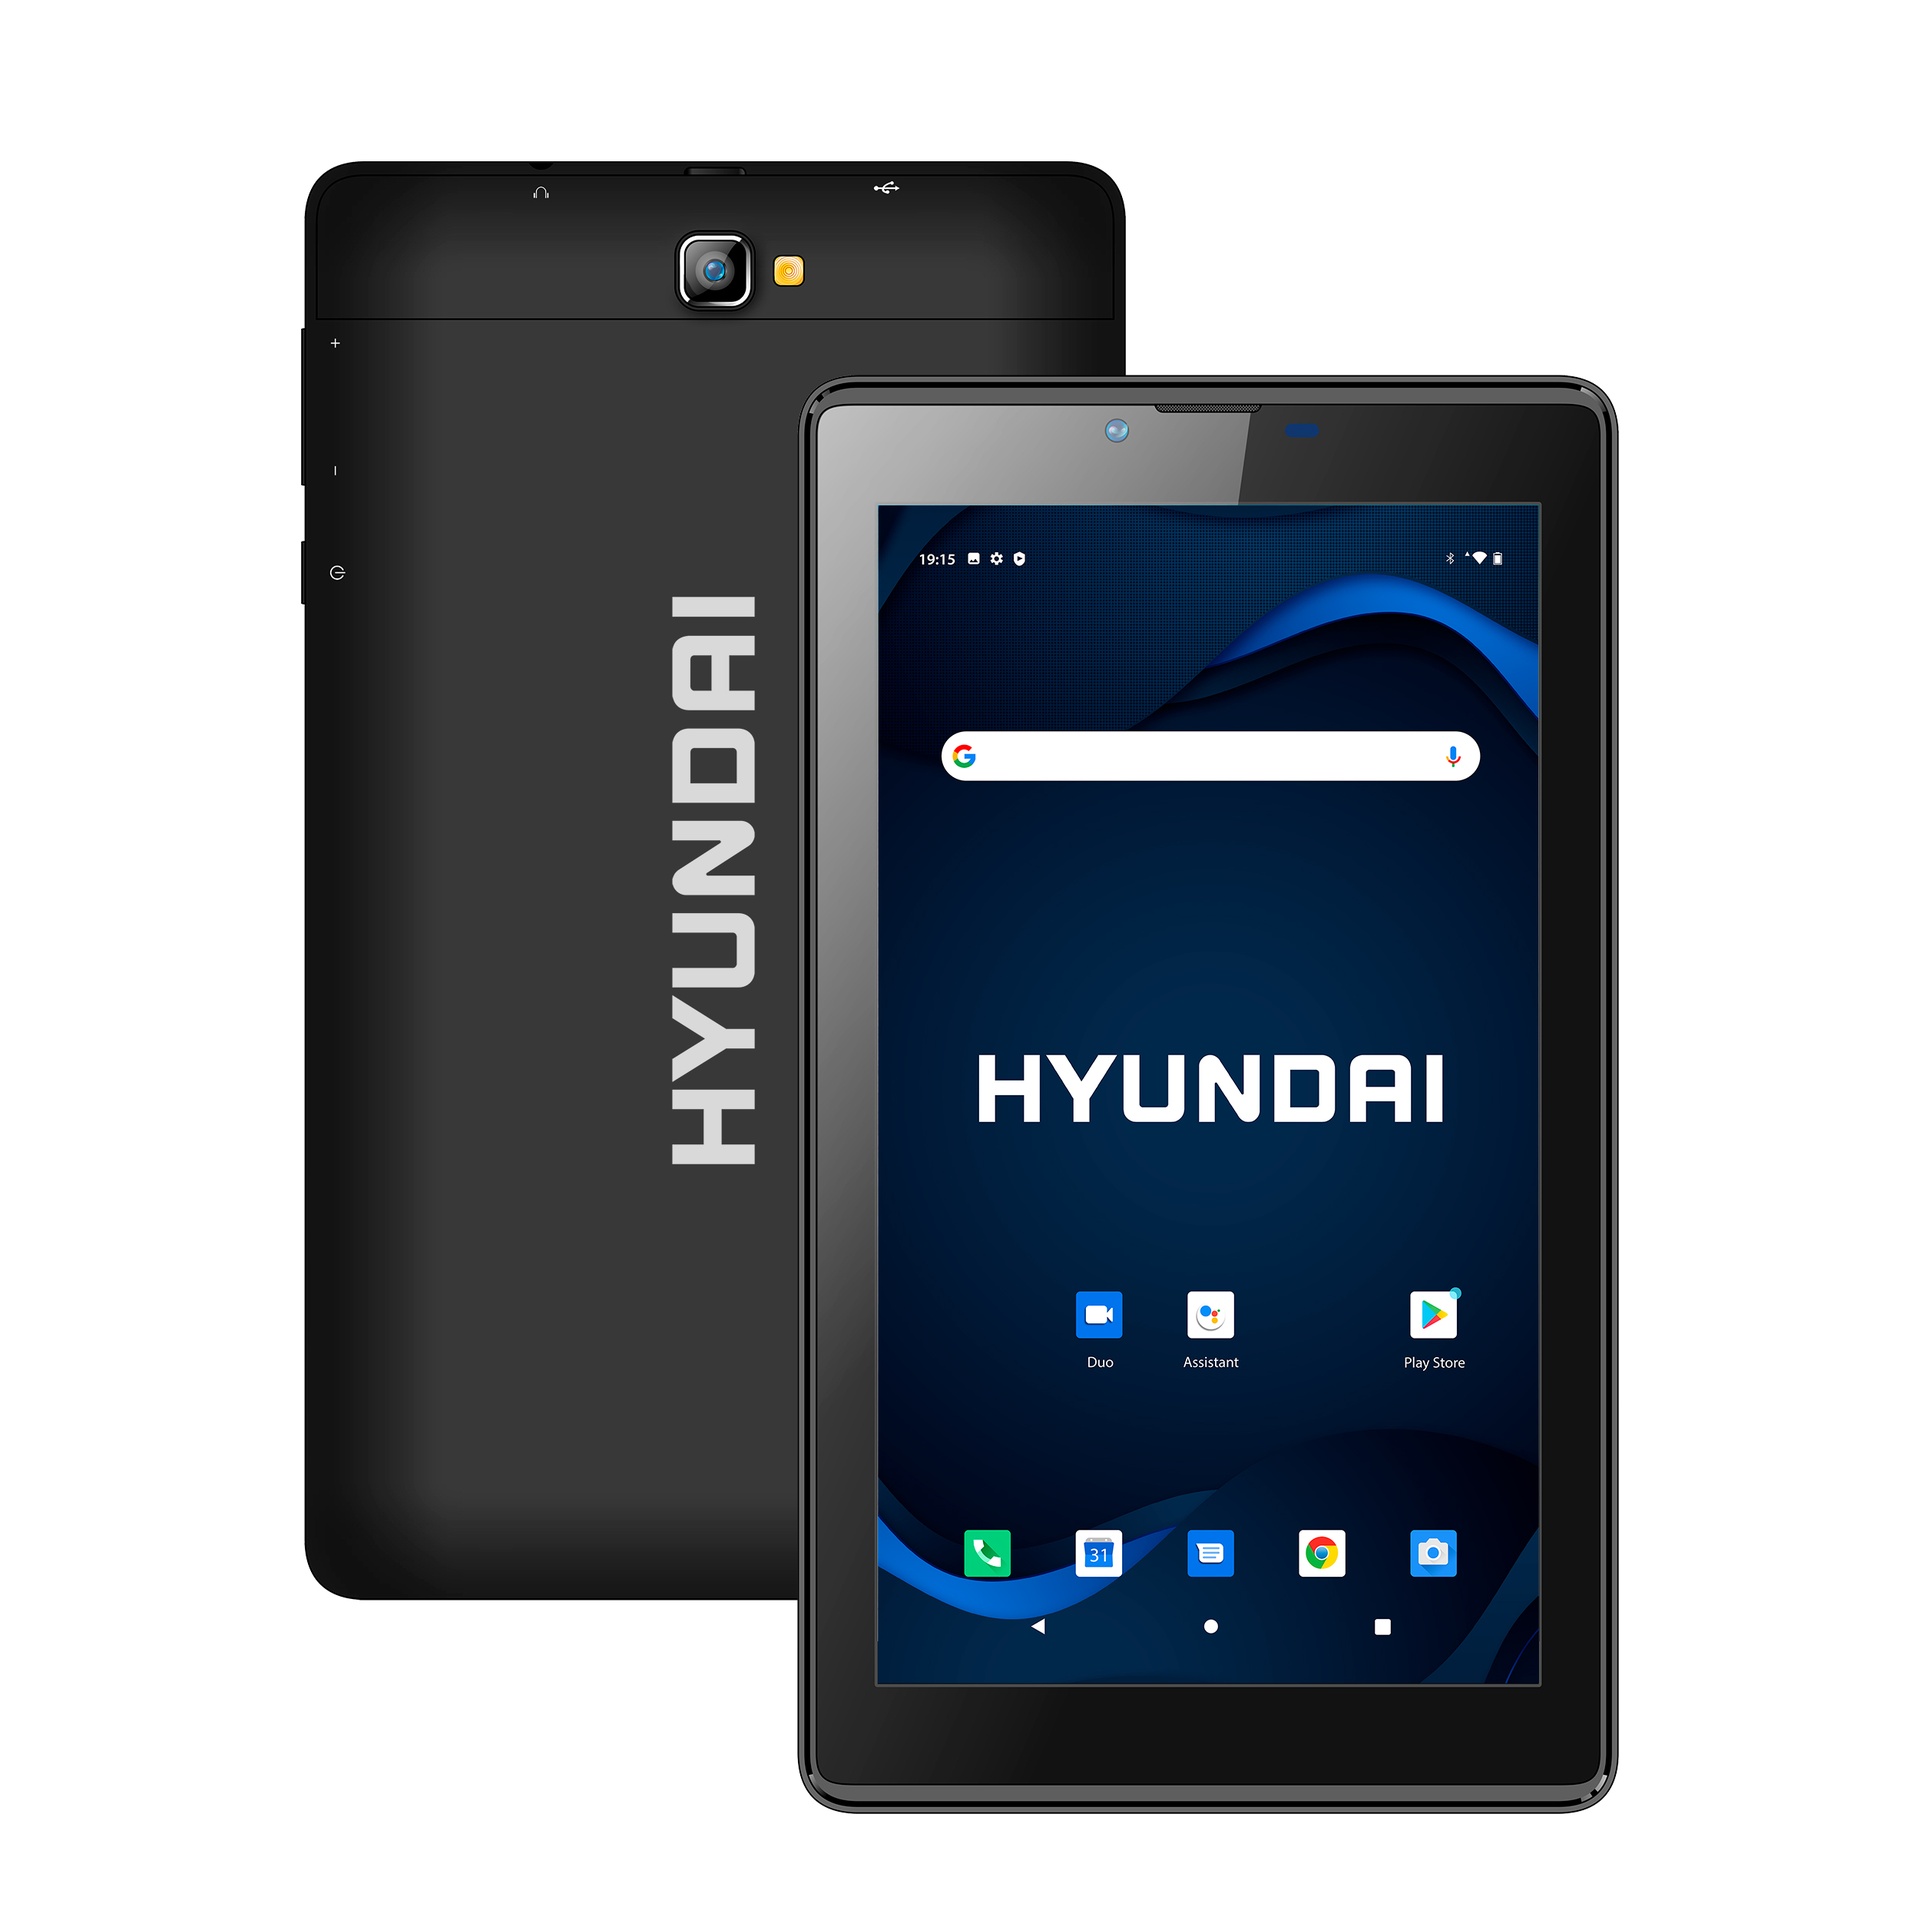 Hyundai HyTab 7GB1, 7" Tablet, 1024x600 IPS, Android 10 GO edition, Quad-Core Processor, 1GB RAM, 16GB Storage, 2MP/2MP, 3G - Black HT7GB1MBK_B UPC  - HYUNDAI